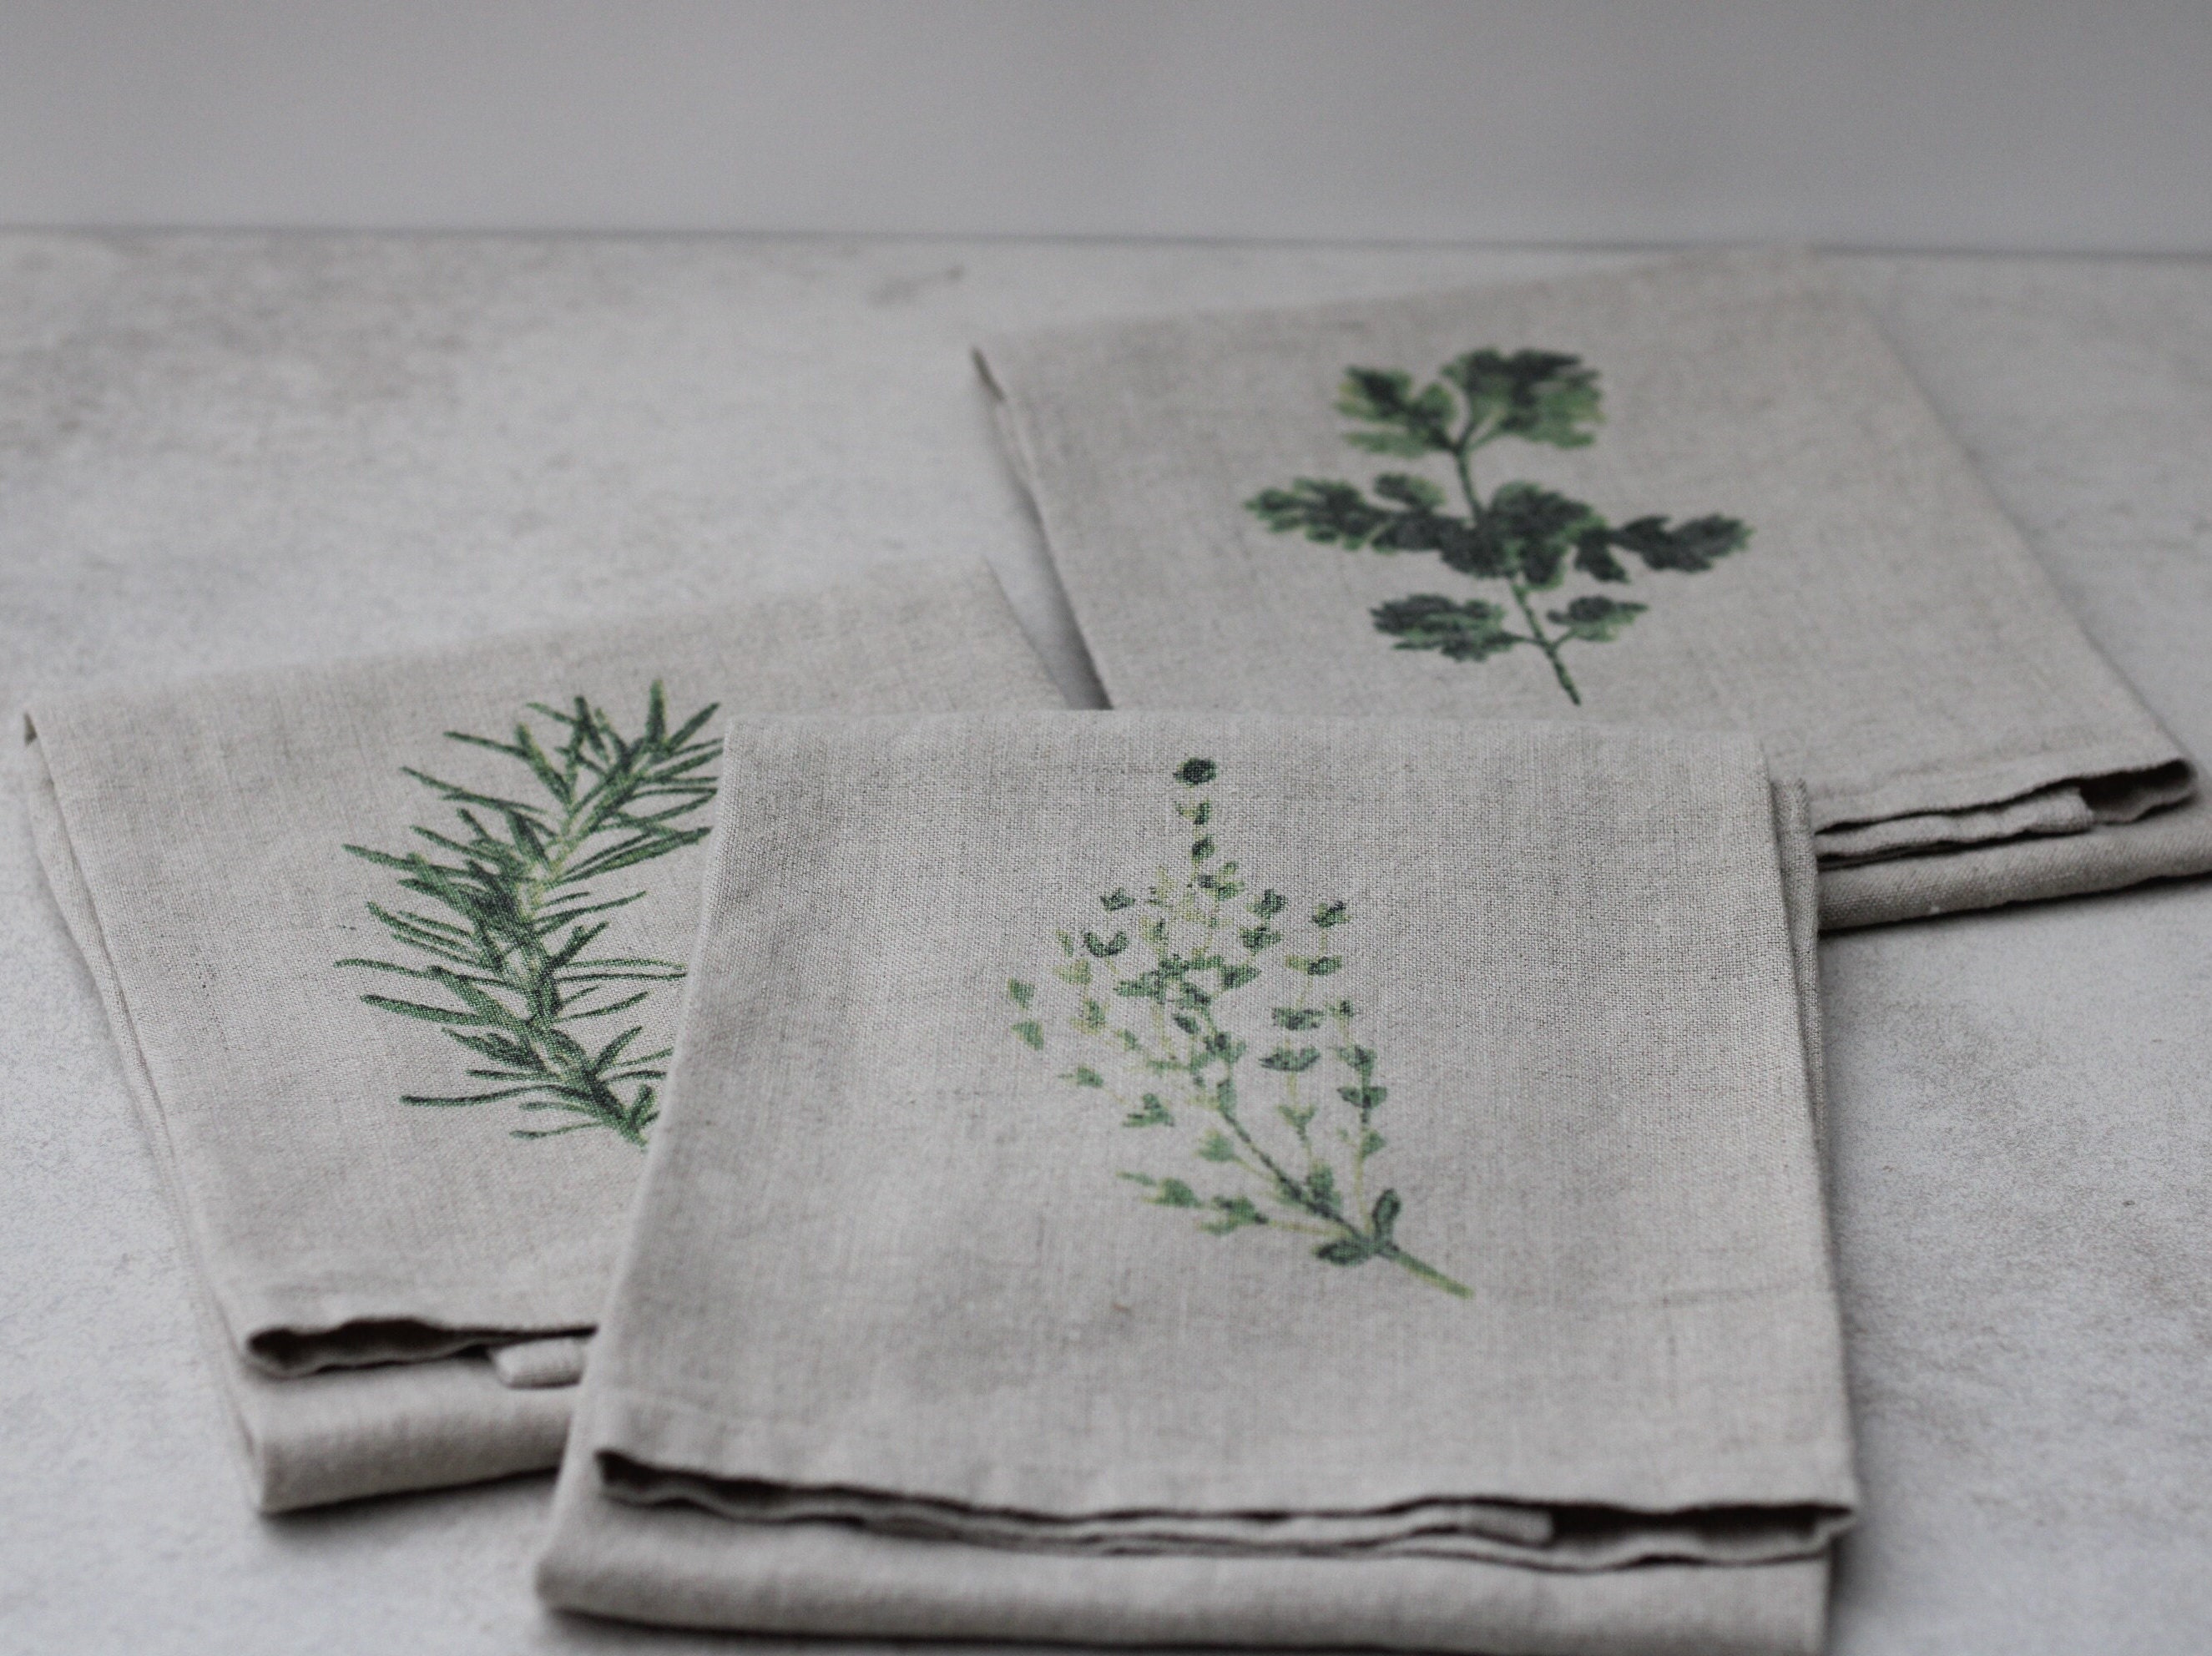 Organic Linen Tea Towels - Light Neutrals Set of 3